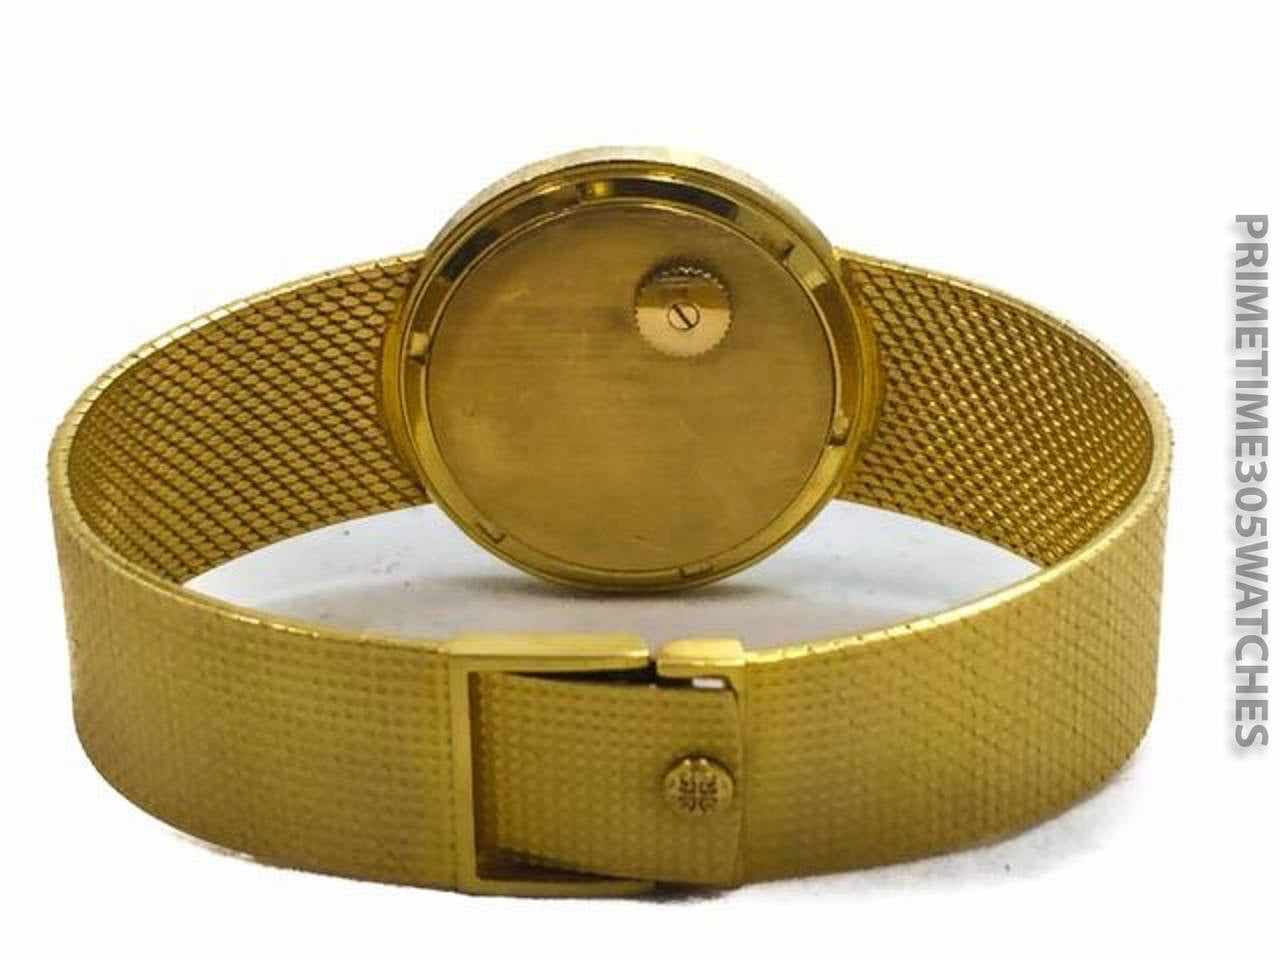 Mens Patek Philippe 18k Yellow Gold Automatic Watch On Bracelet, Ref 3563/3 1